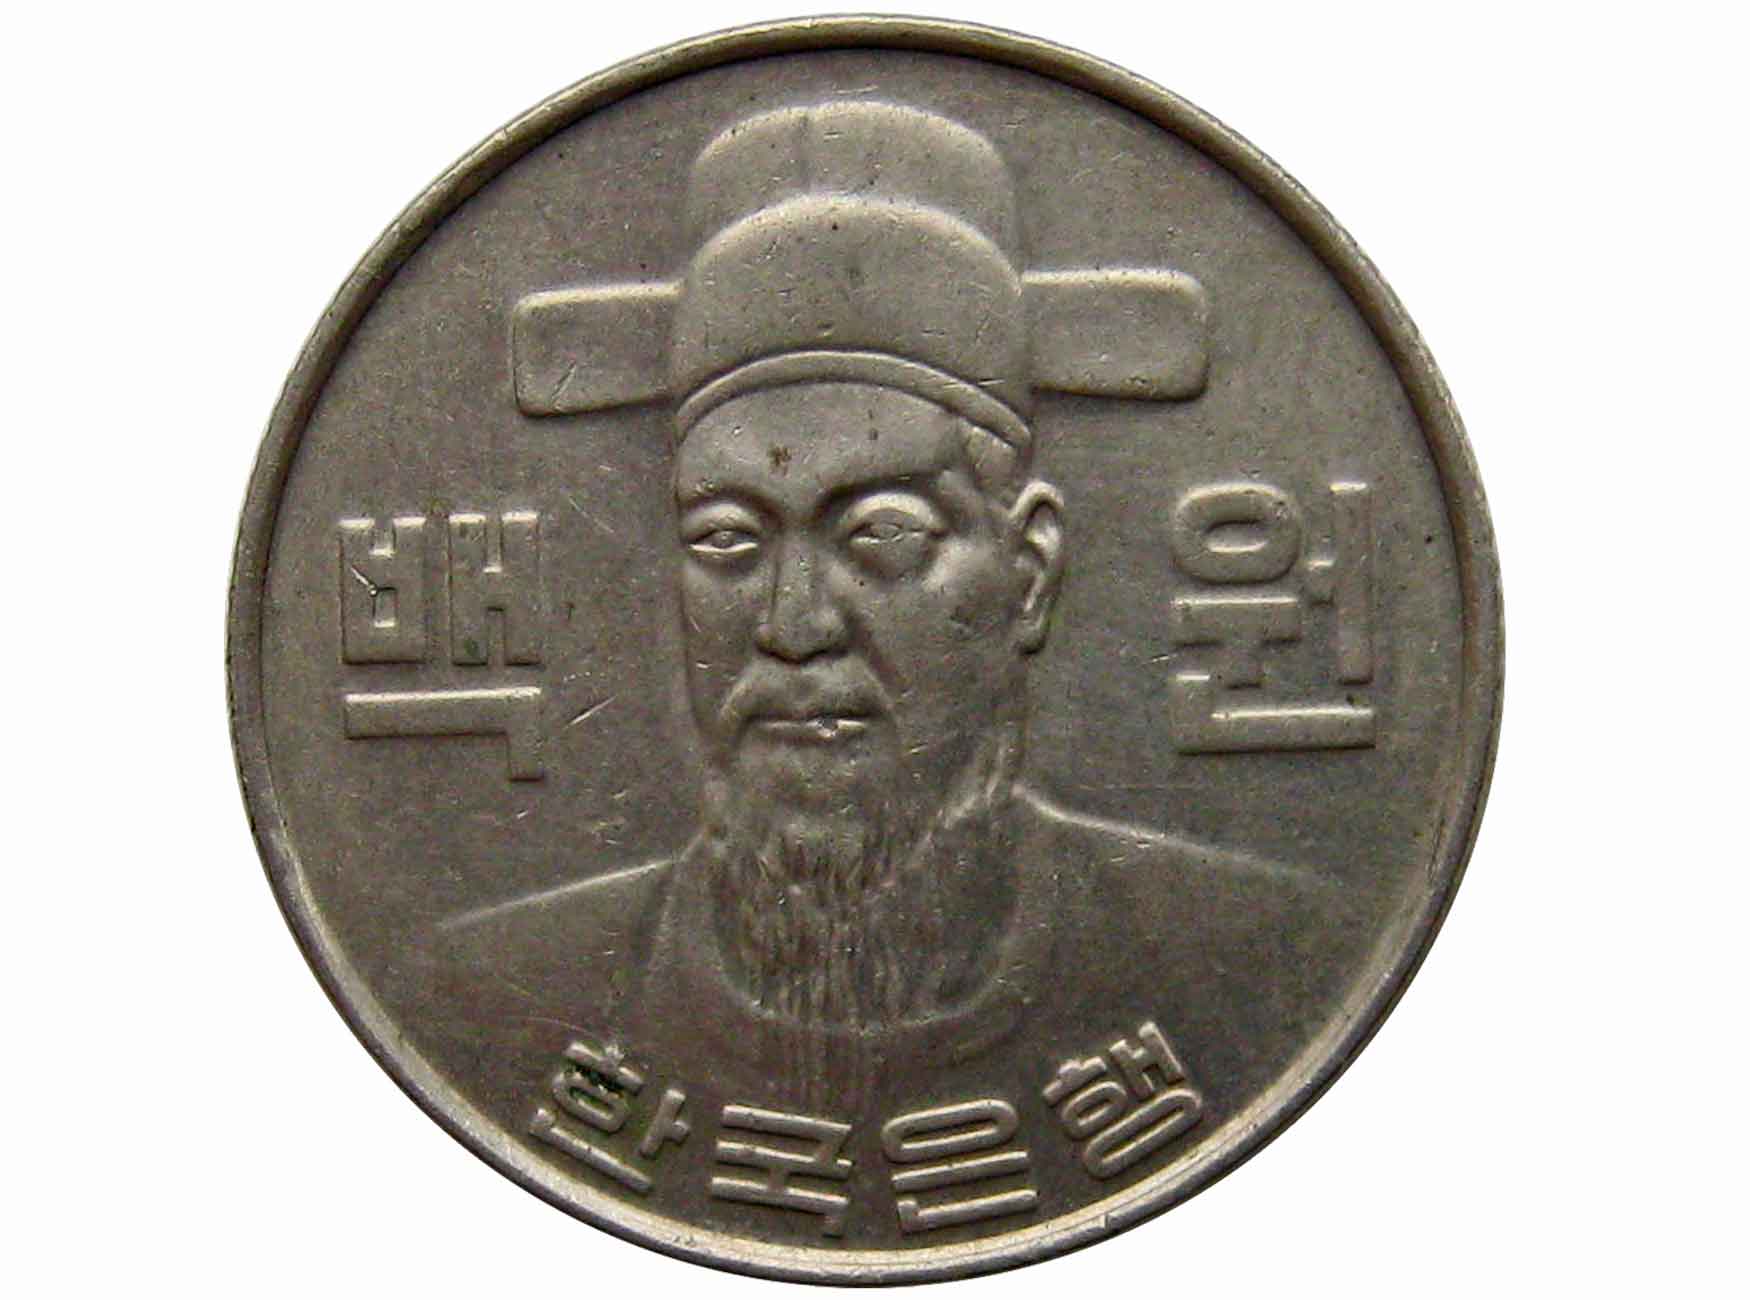 100 Вон Южная Корея 2002. 100 Вон Южная Корея 1982. Корейская монета номинал 100 вон. Монета Южной Кореи 100 вон.